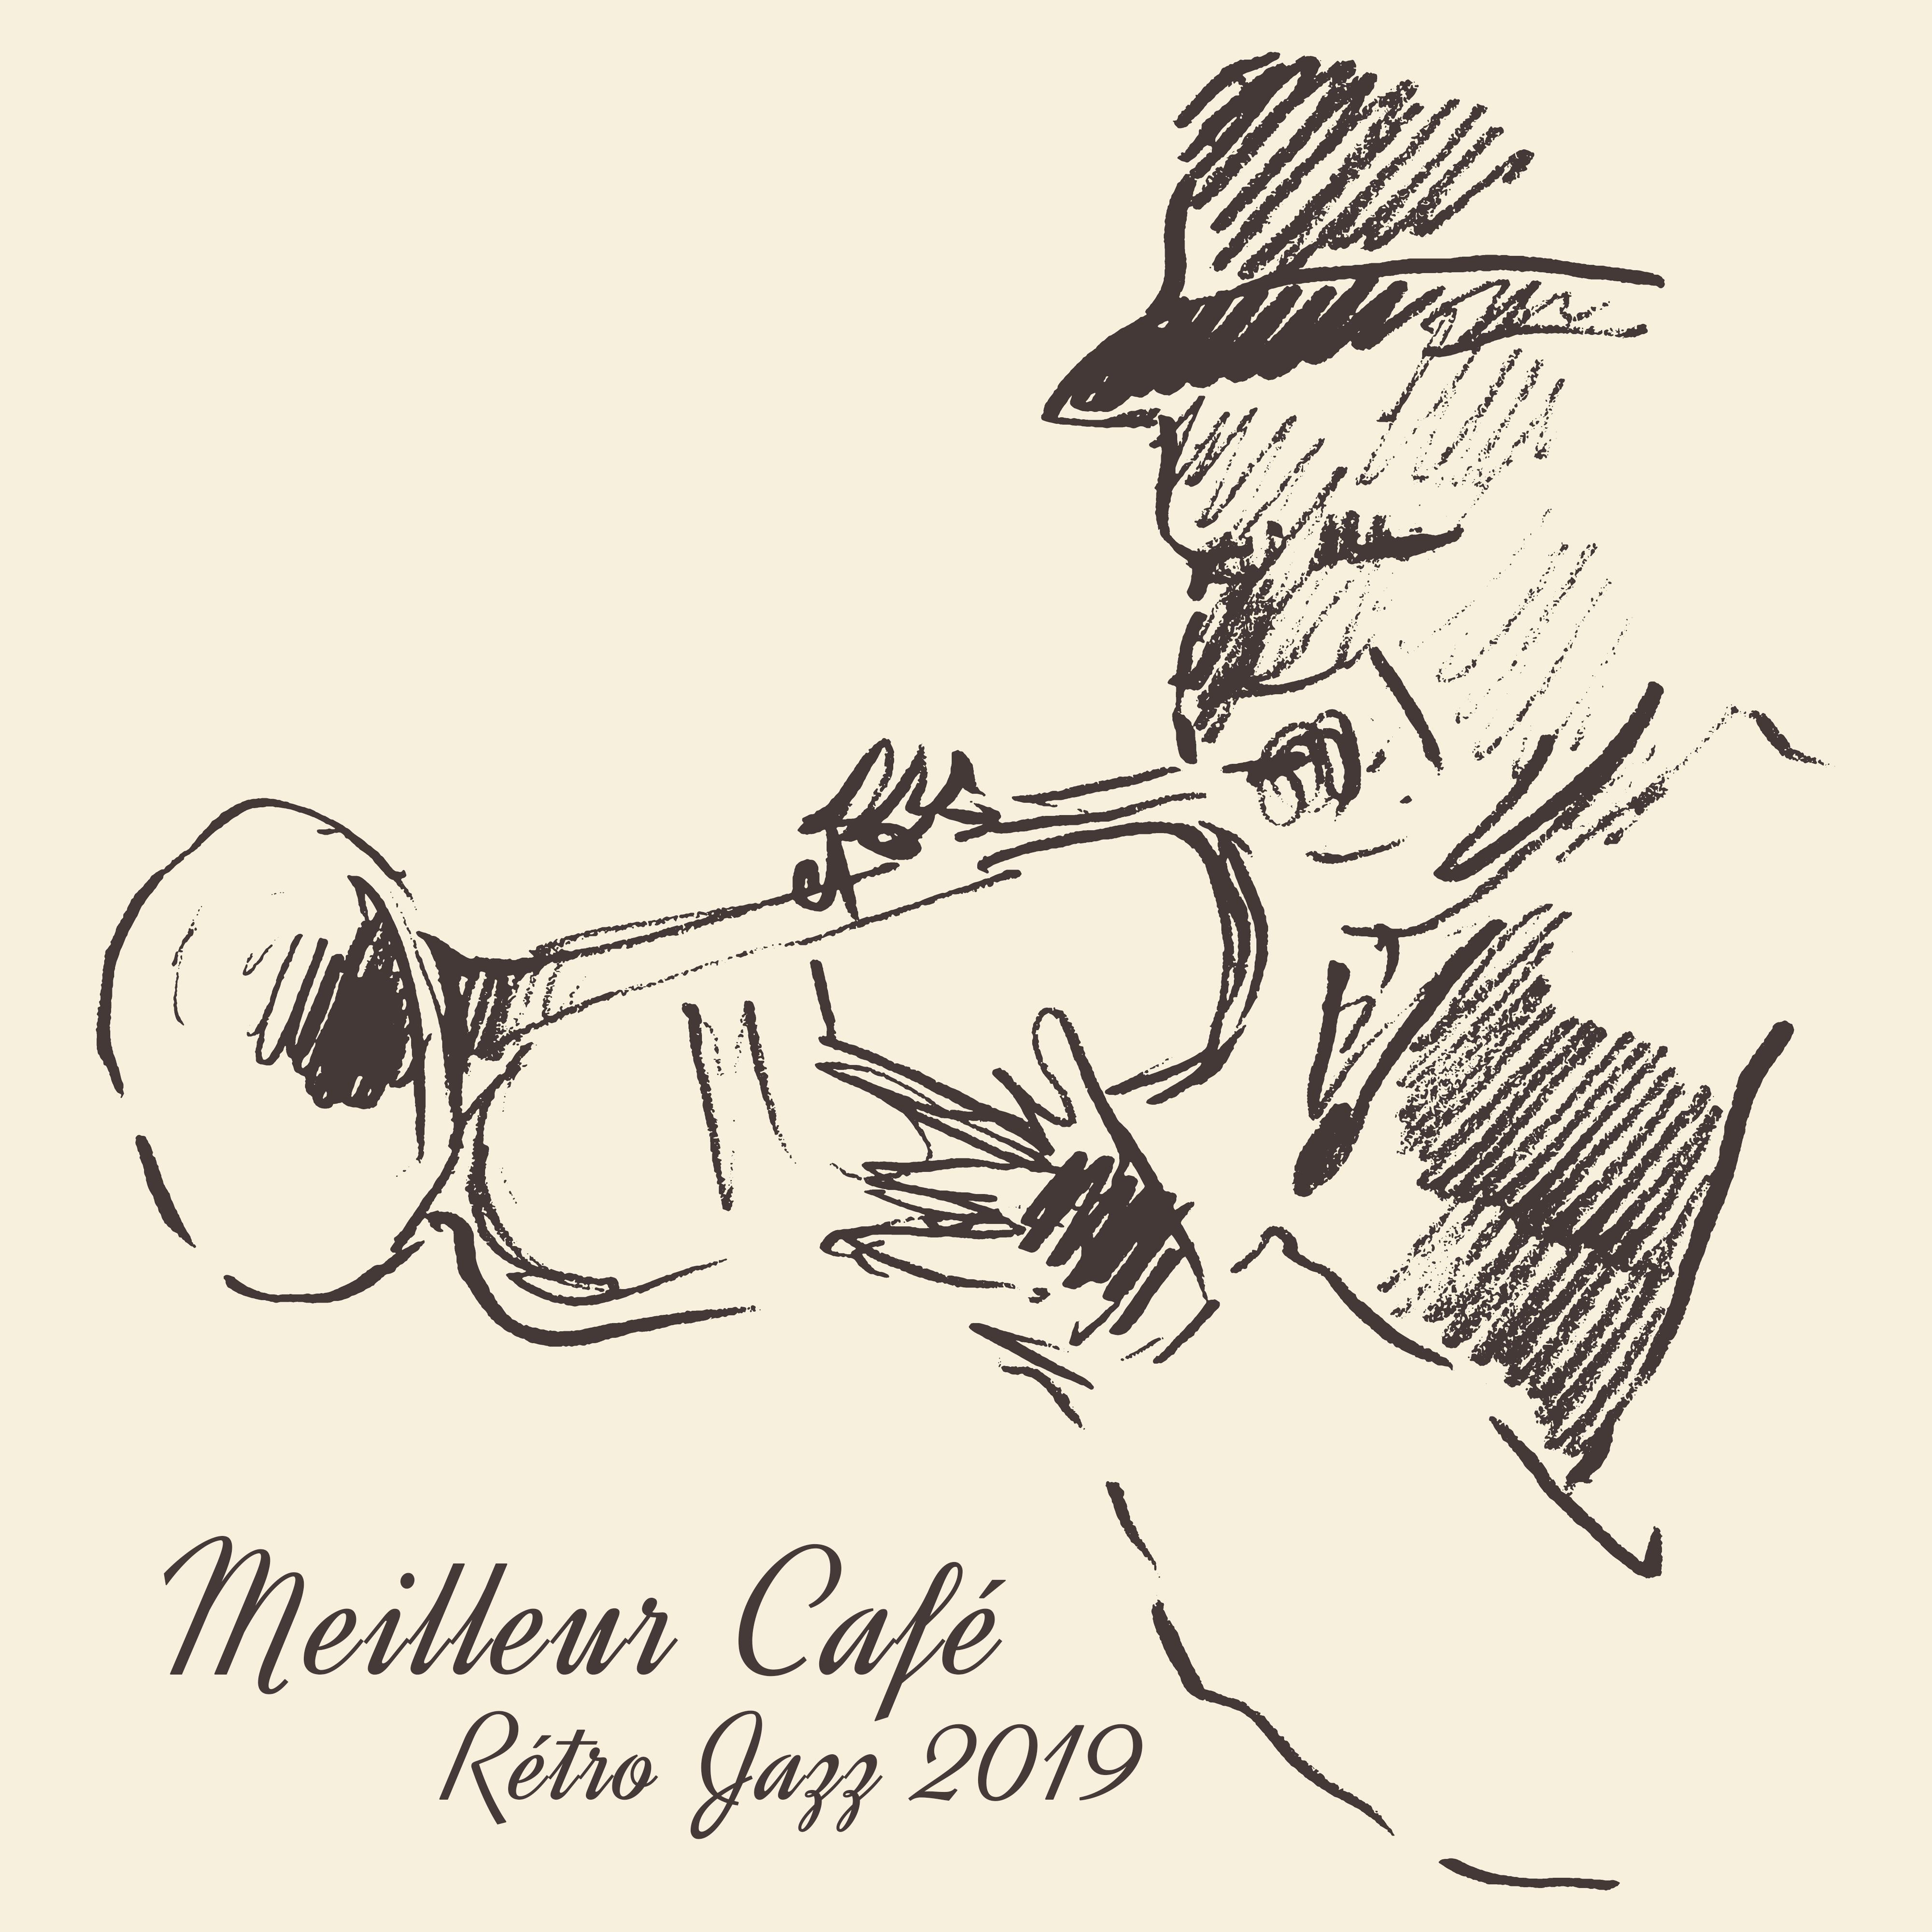 Meilleur Cafe Re tro Jazz 2019